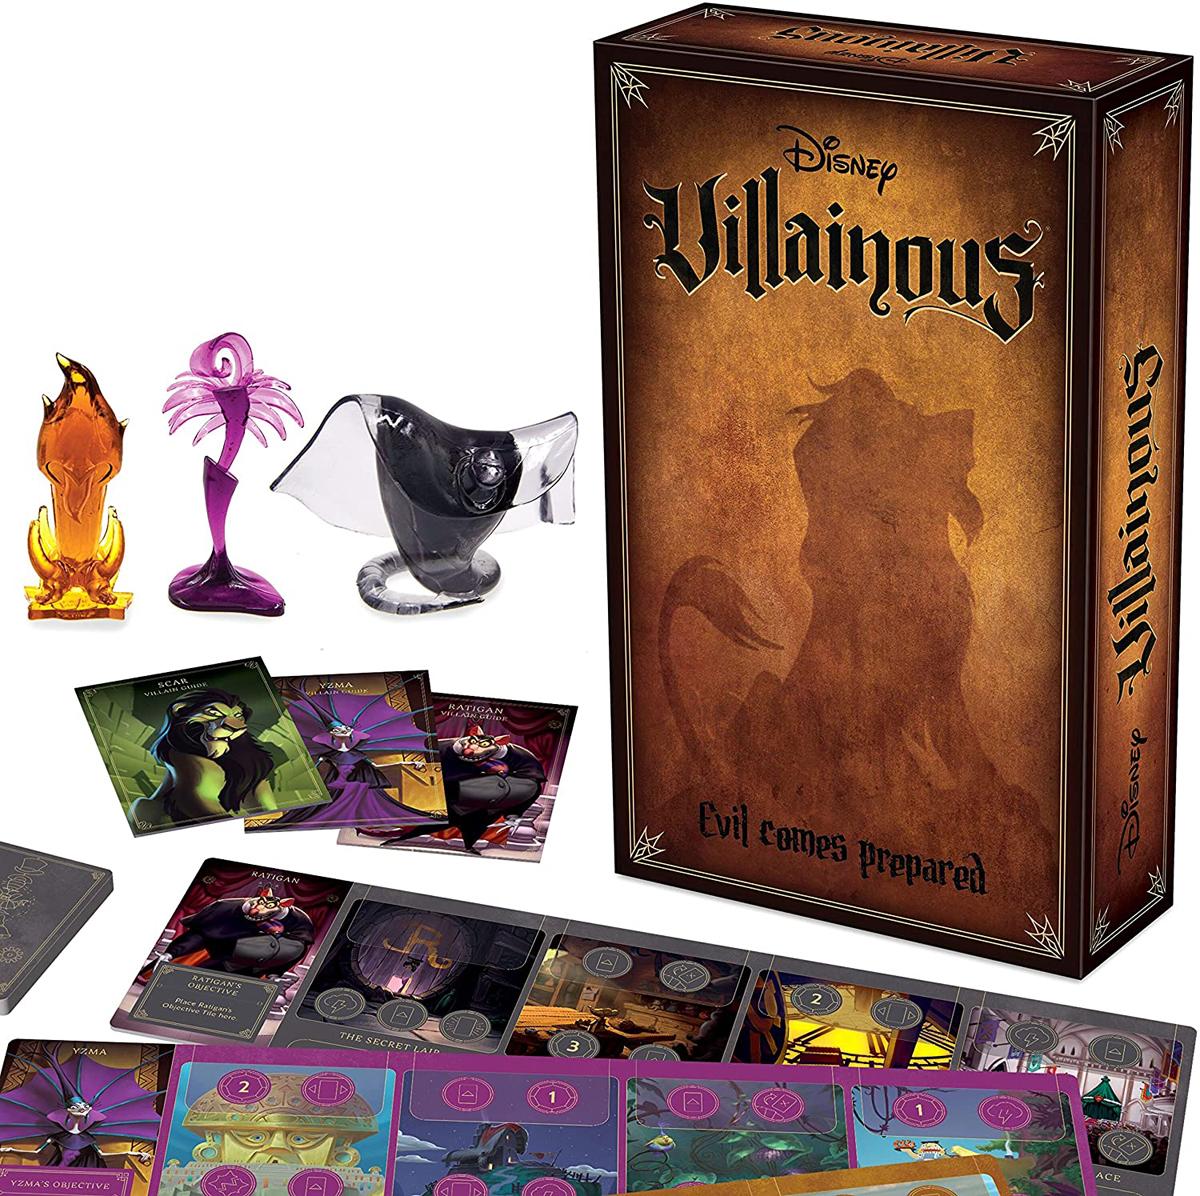 Ravensburger Disney Villainous Board Game Expansion for $15.99